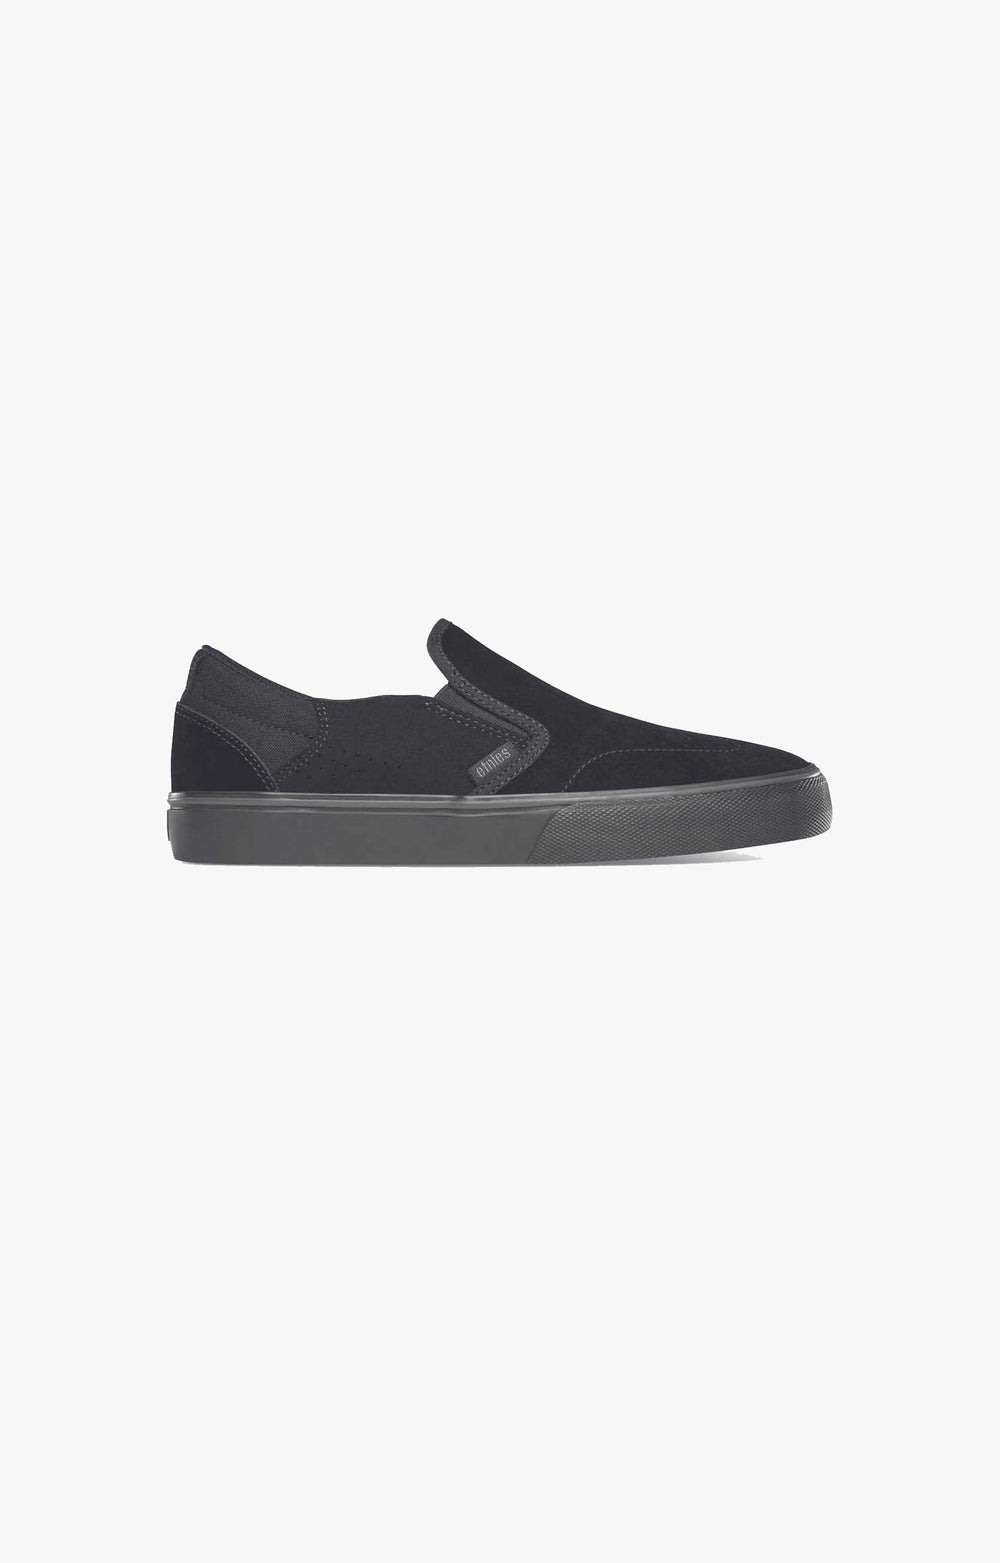 Etnies Marana Youth Slip On Shoe, Black/Black